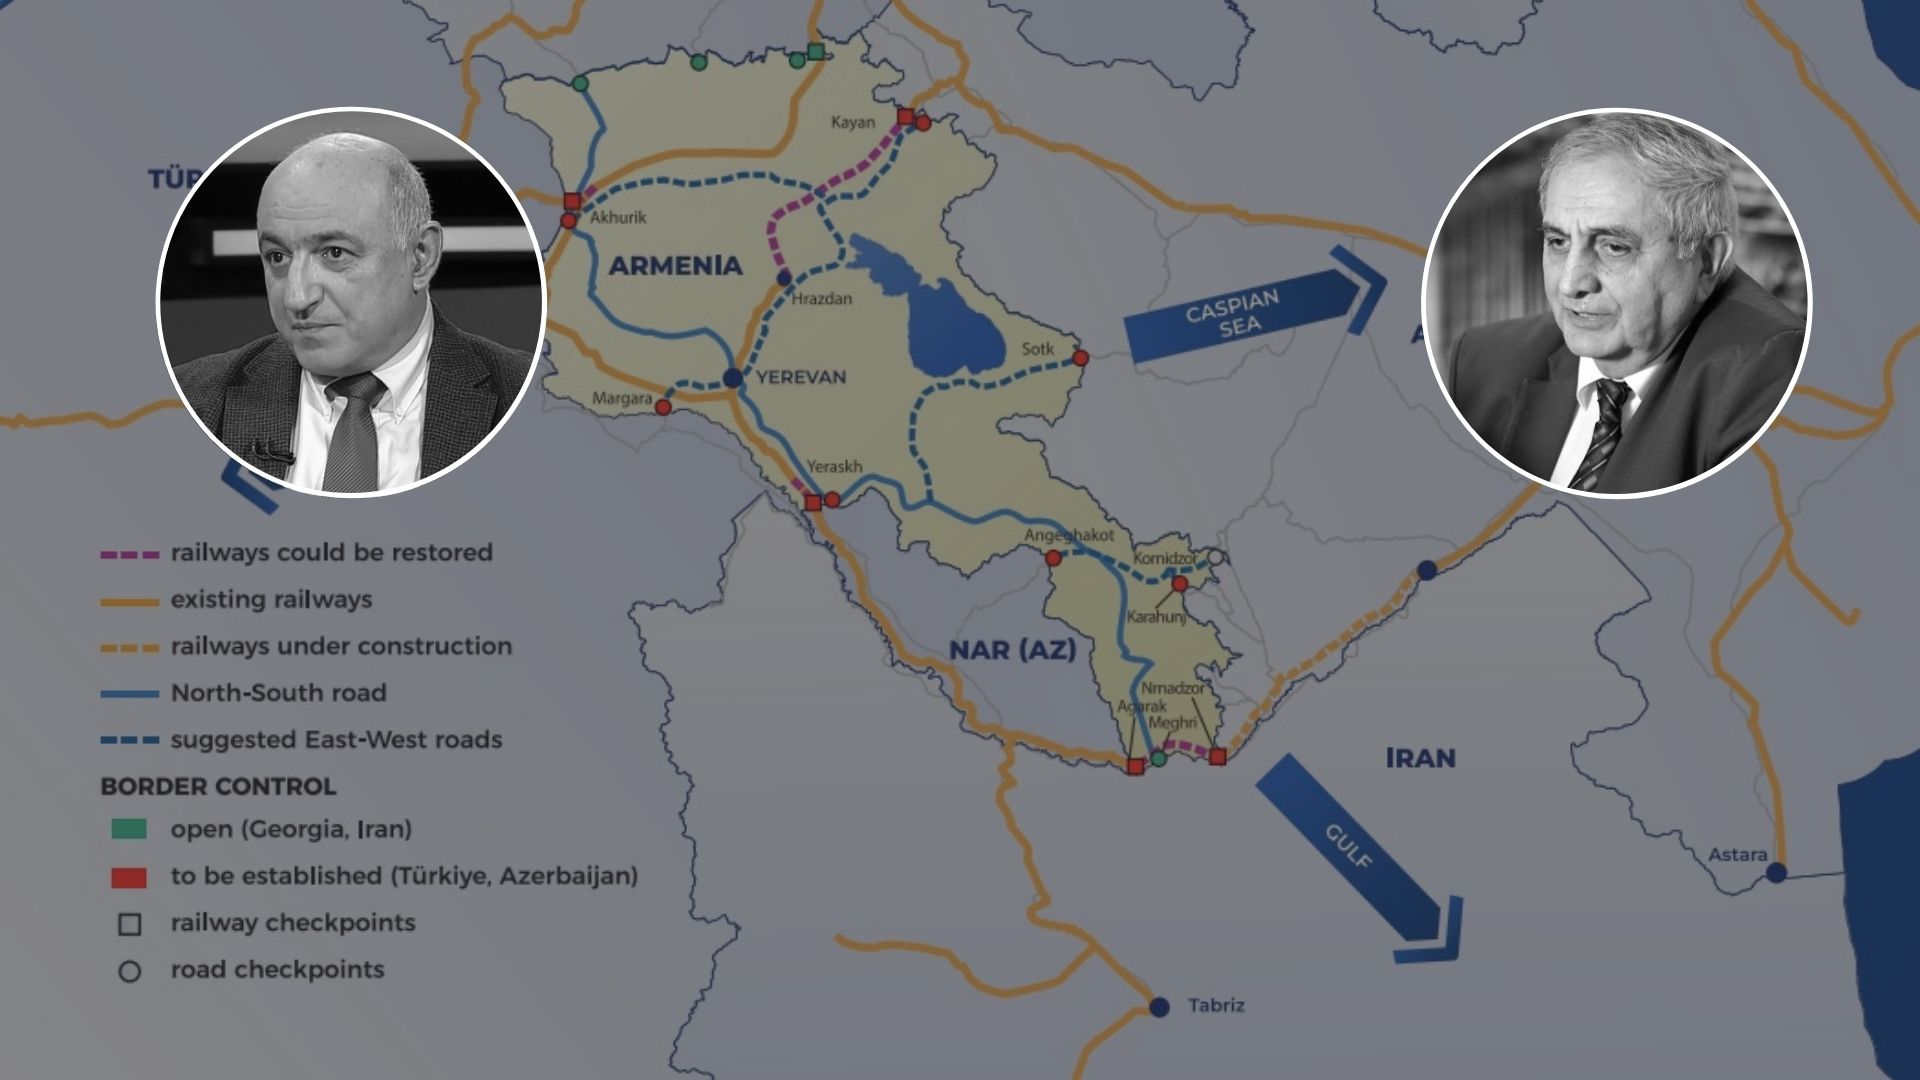 WILL THE “PEACE CROSSROAD” TURN ARMENIA INTO A REGIONAL HUB?